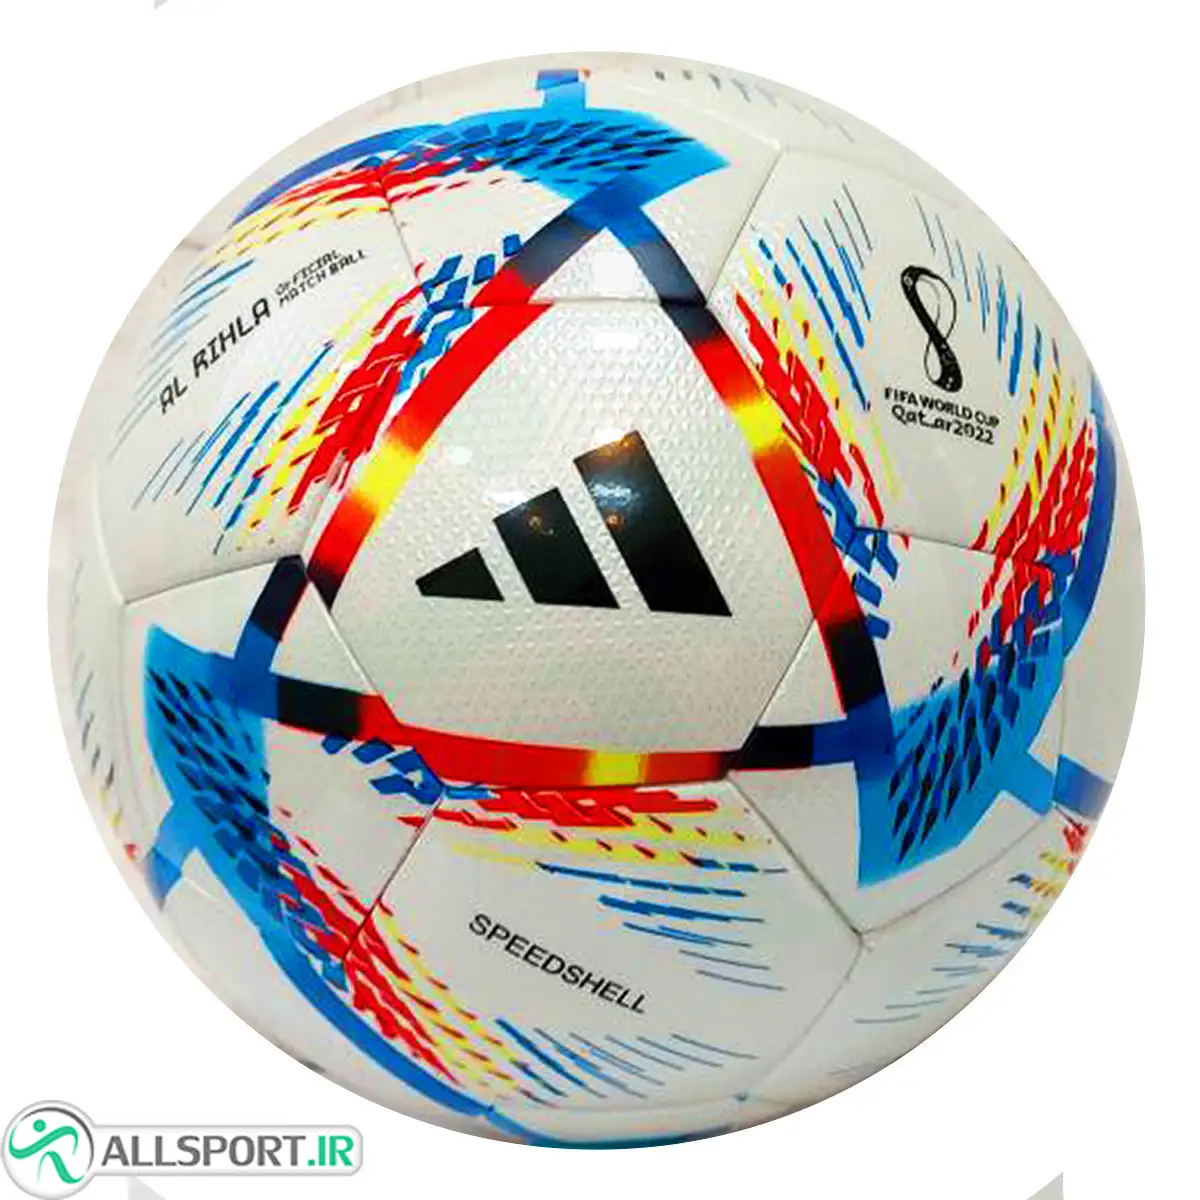 توپ فوتبال جام جهانی آدیداس طرح اصلی Adidas Soccer Football 12154606